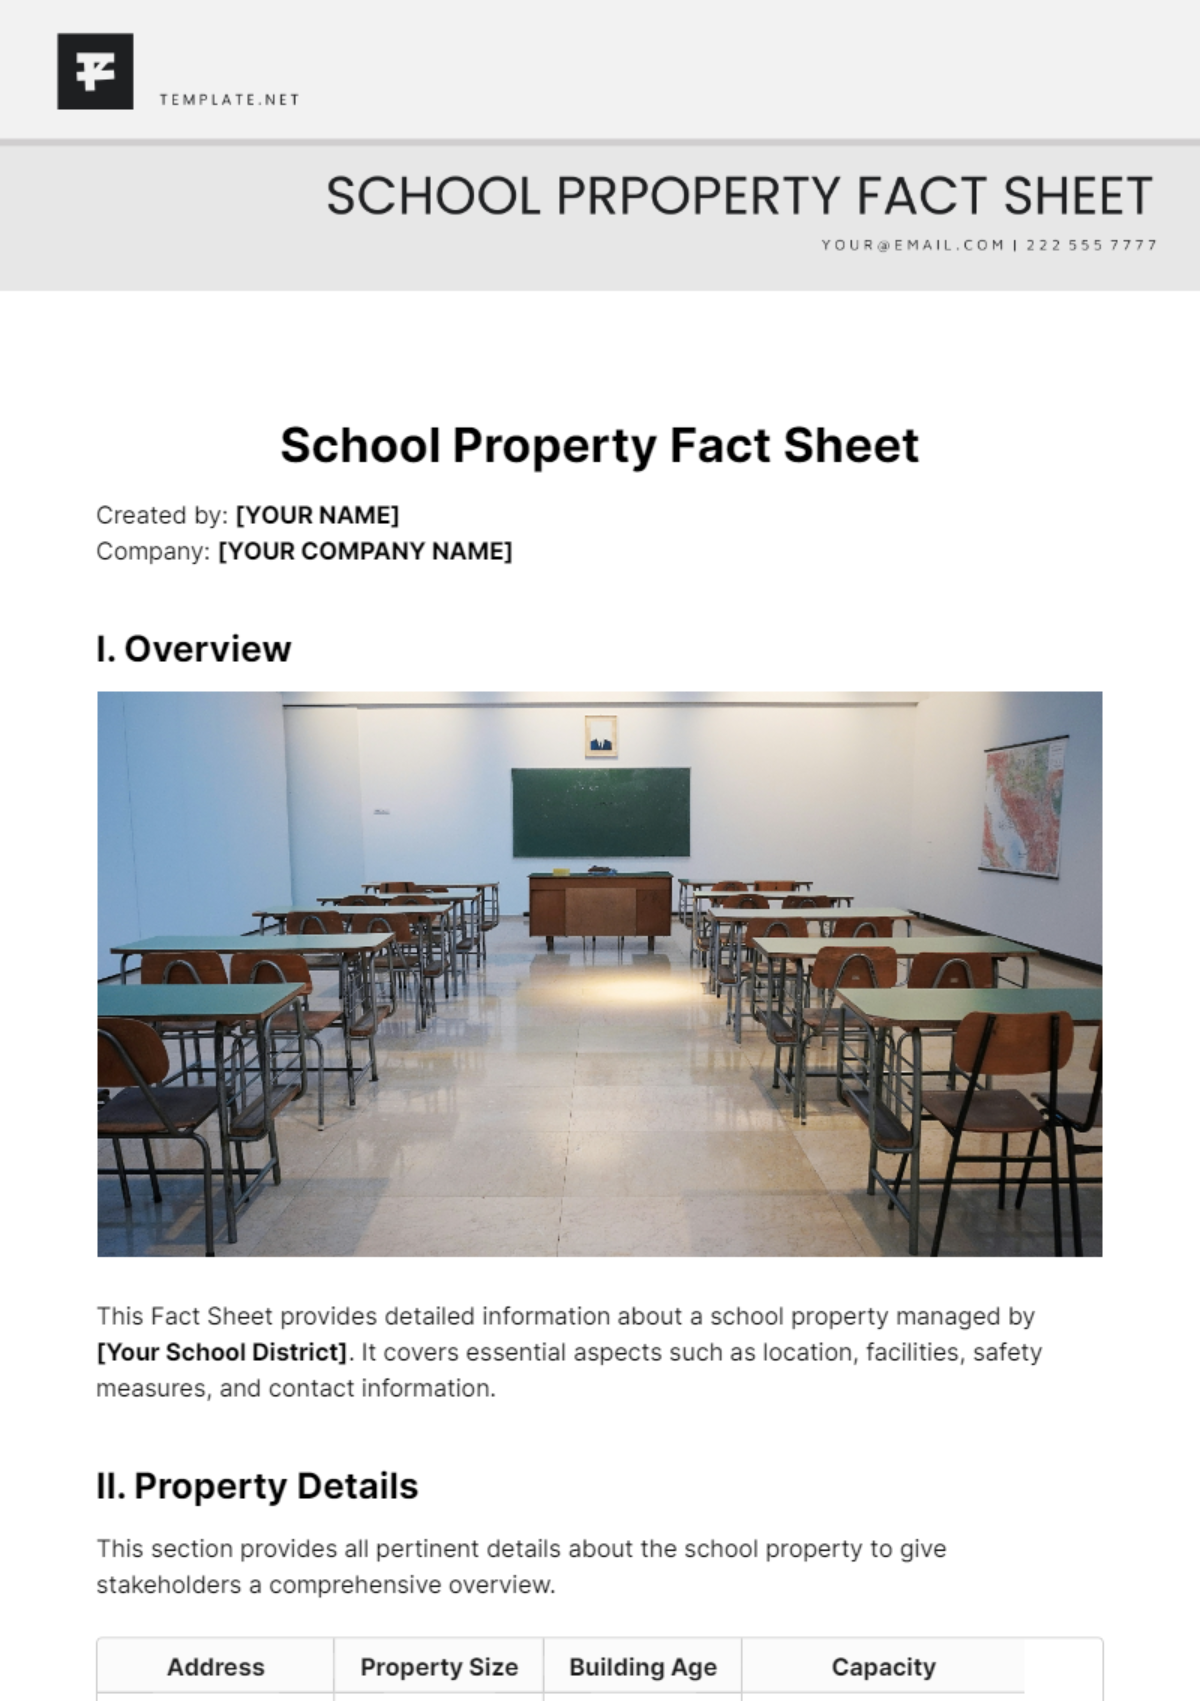 School Property Fact Sheet Template